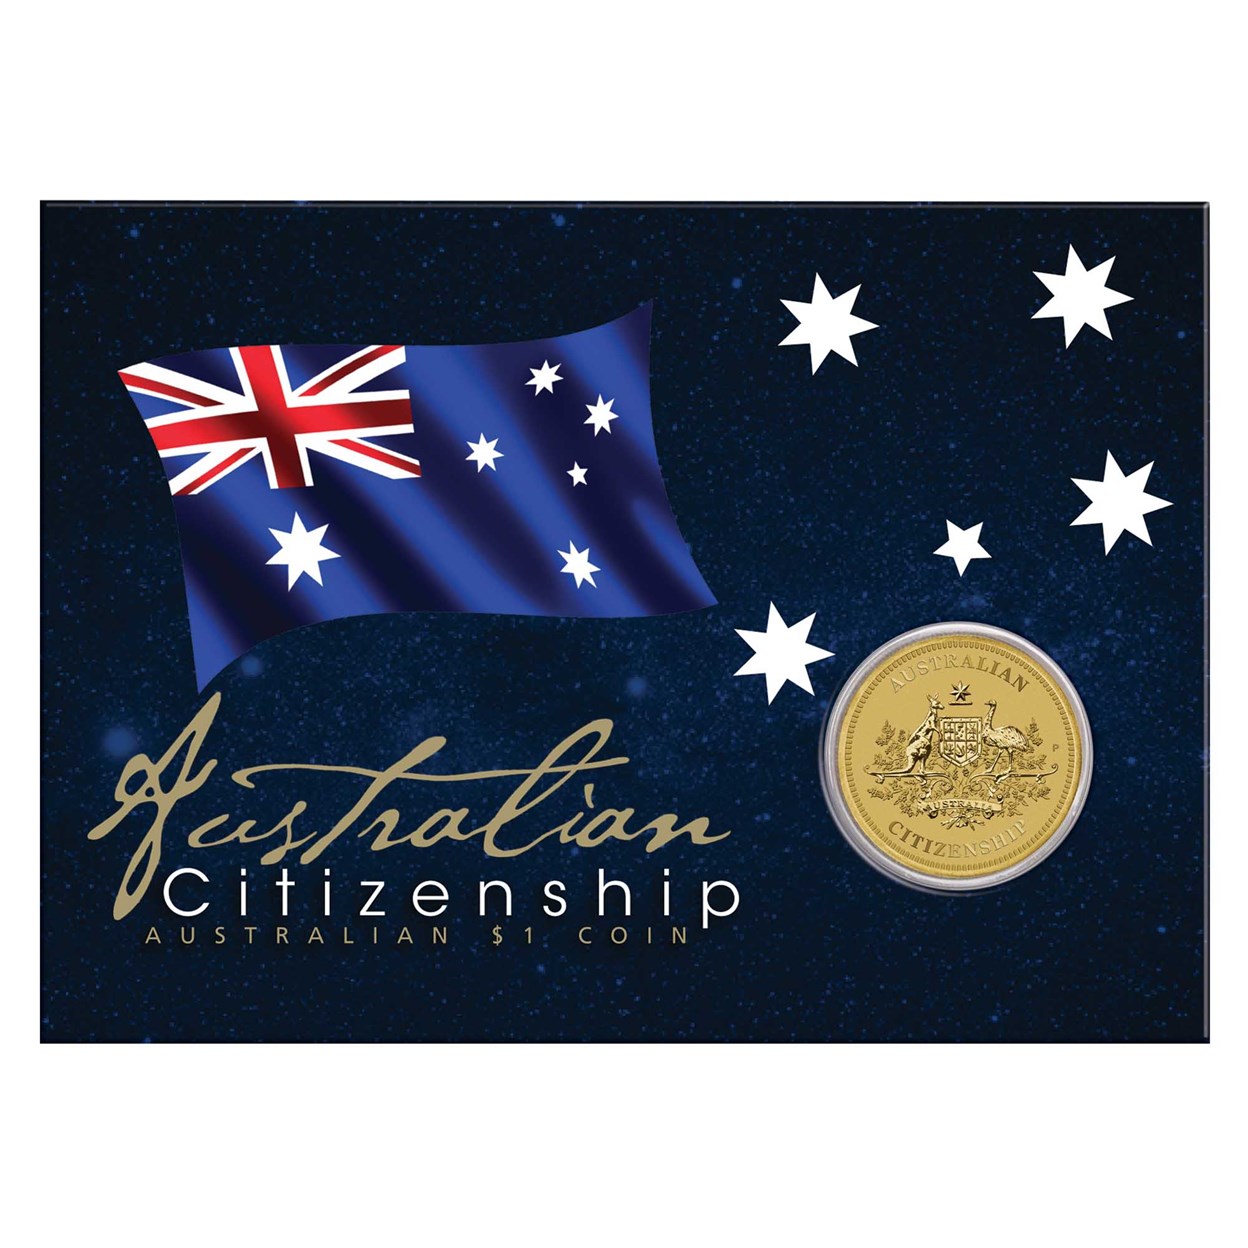 04 australian citizenship 2020 $1 coin InCard